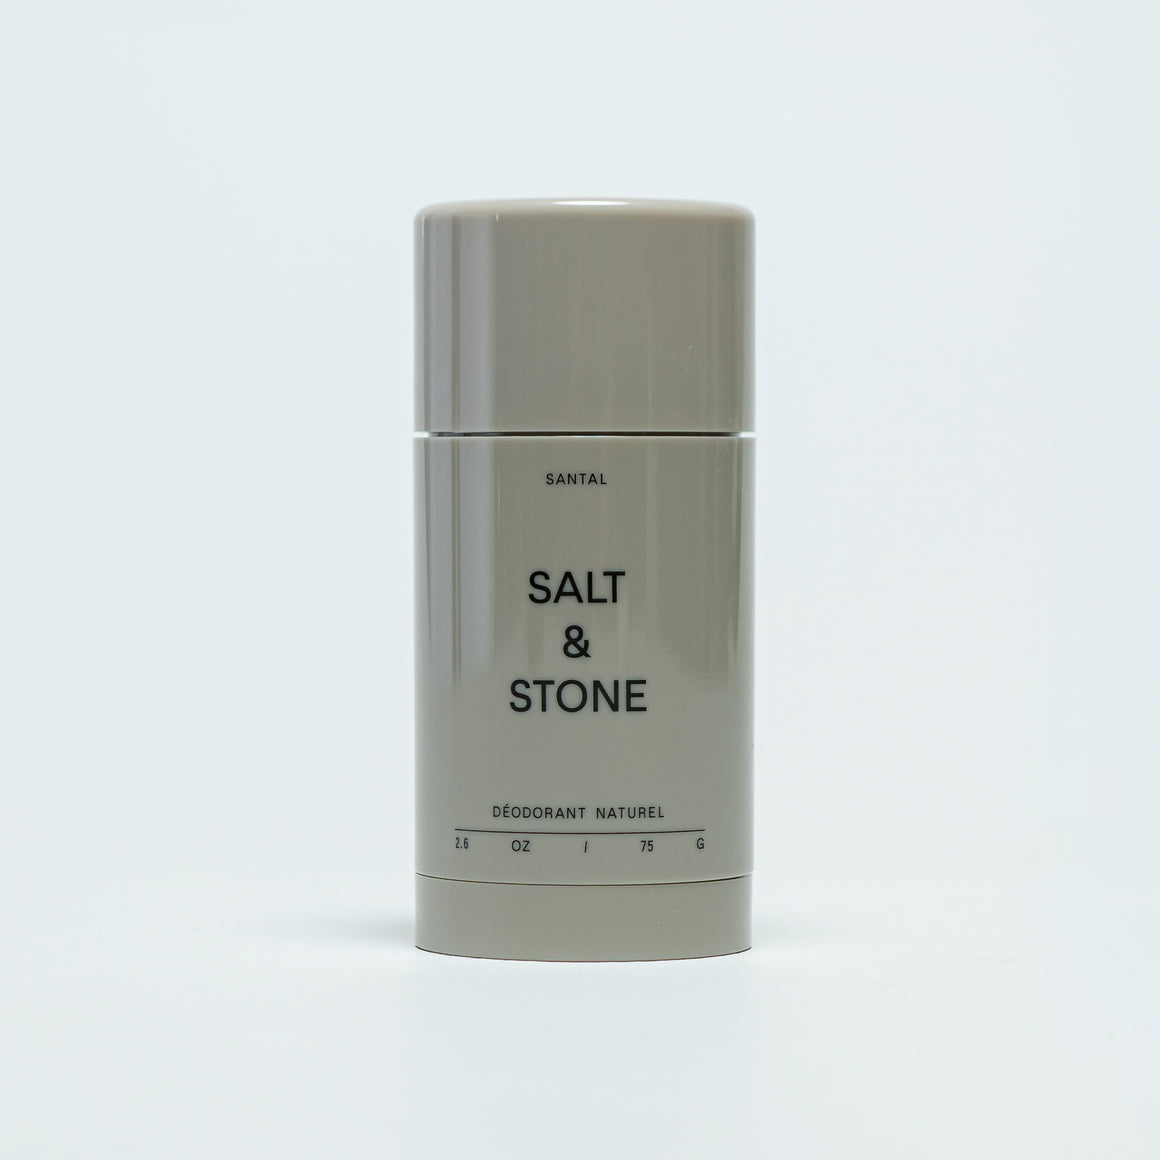 Salt & Stone - Natural Deodorant - Santal - Up There Athletics